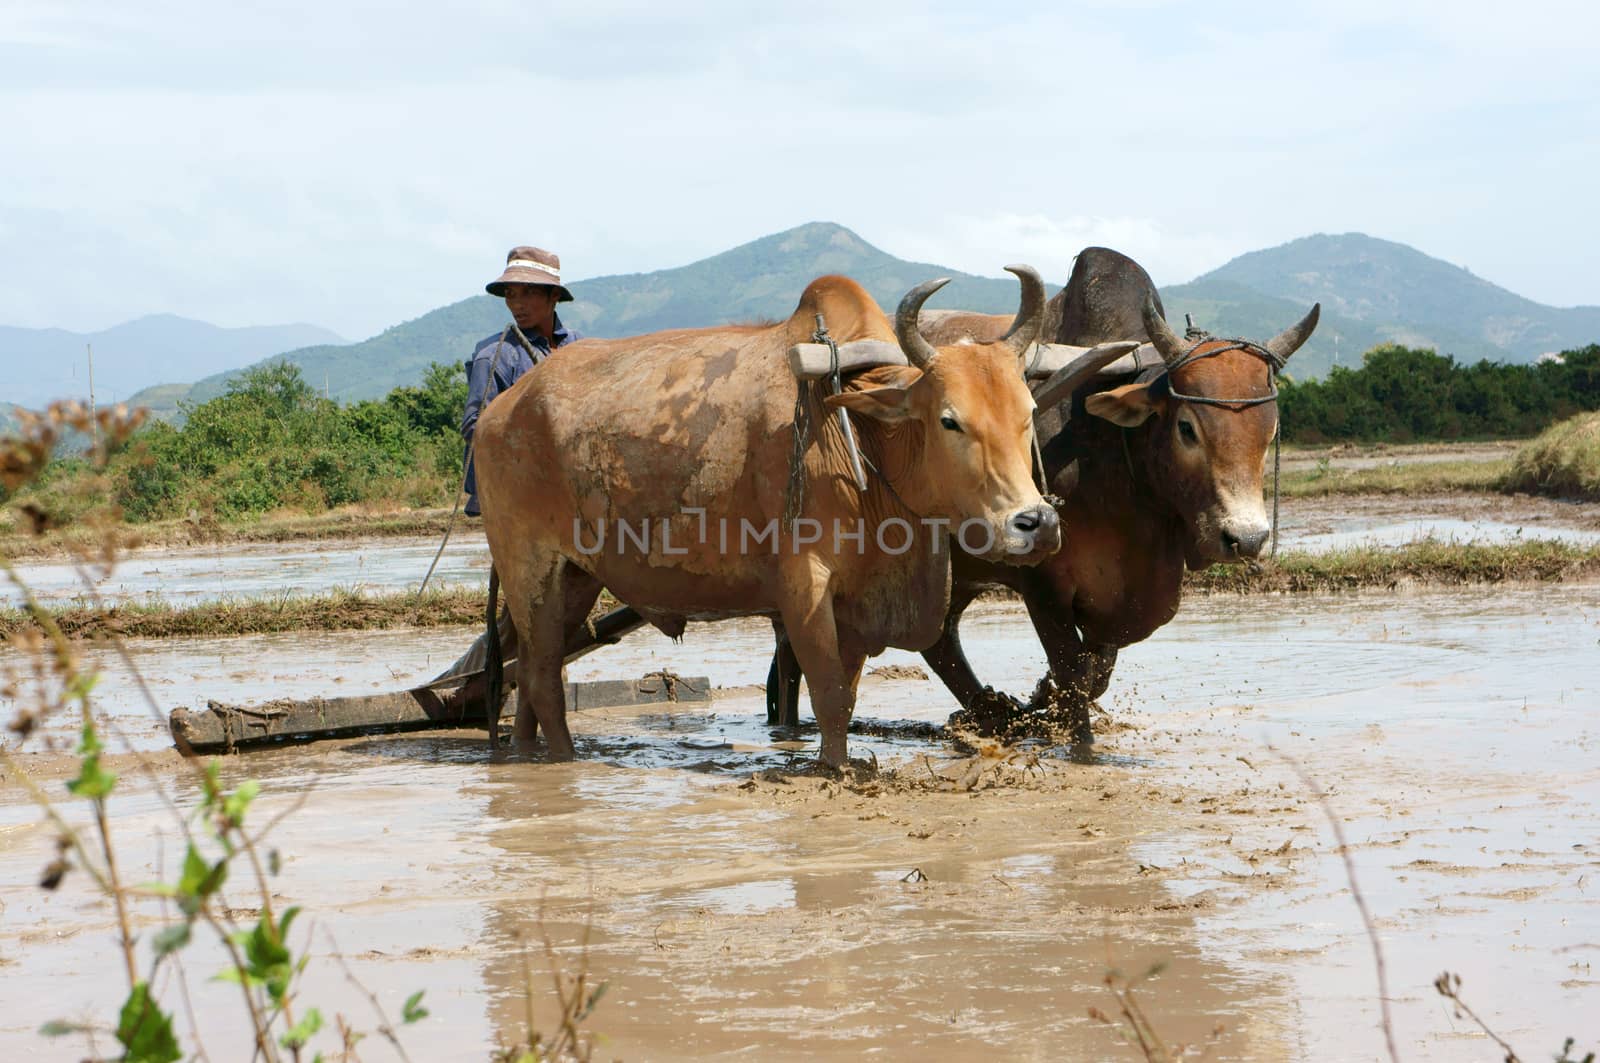  BINH THUAN, VIET NAM- FEBRUARY 4: Farmer with two buffalos ploughing on rice field, February 4, 2013 in Binh Thuan, Viet Nam     